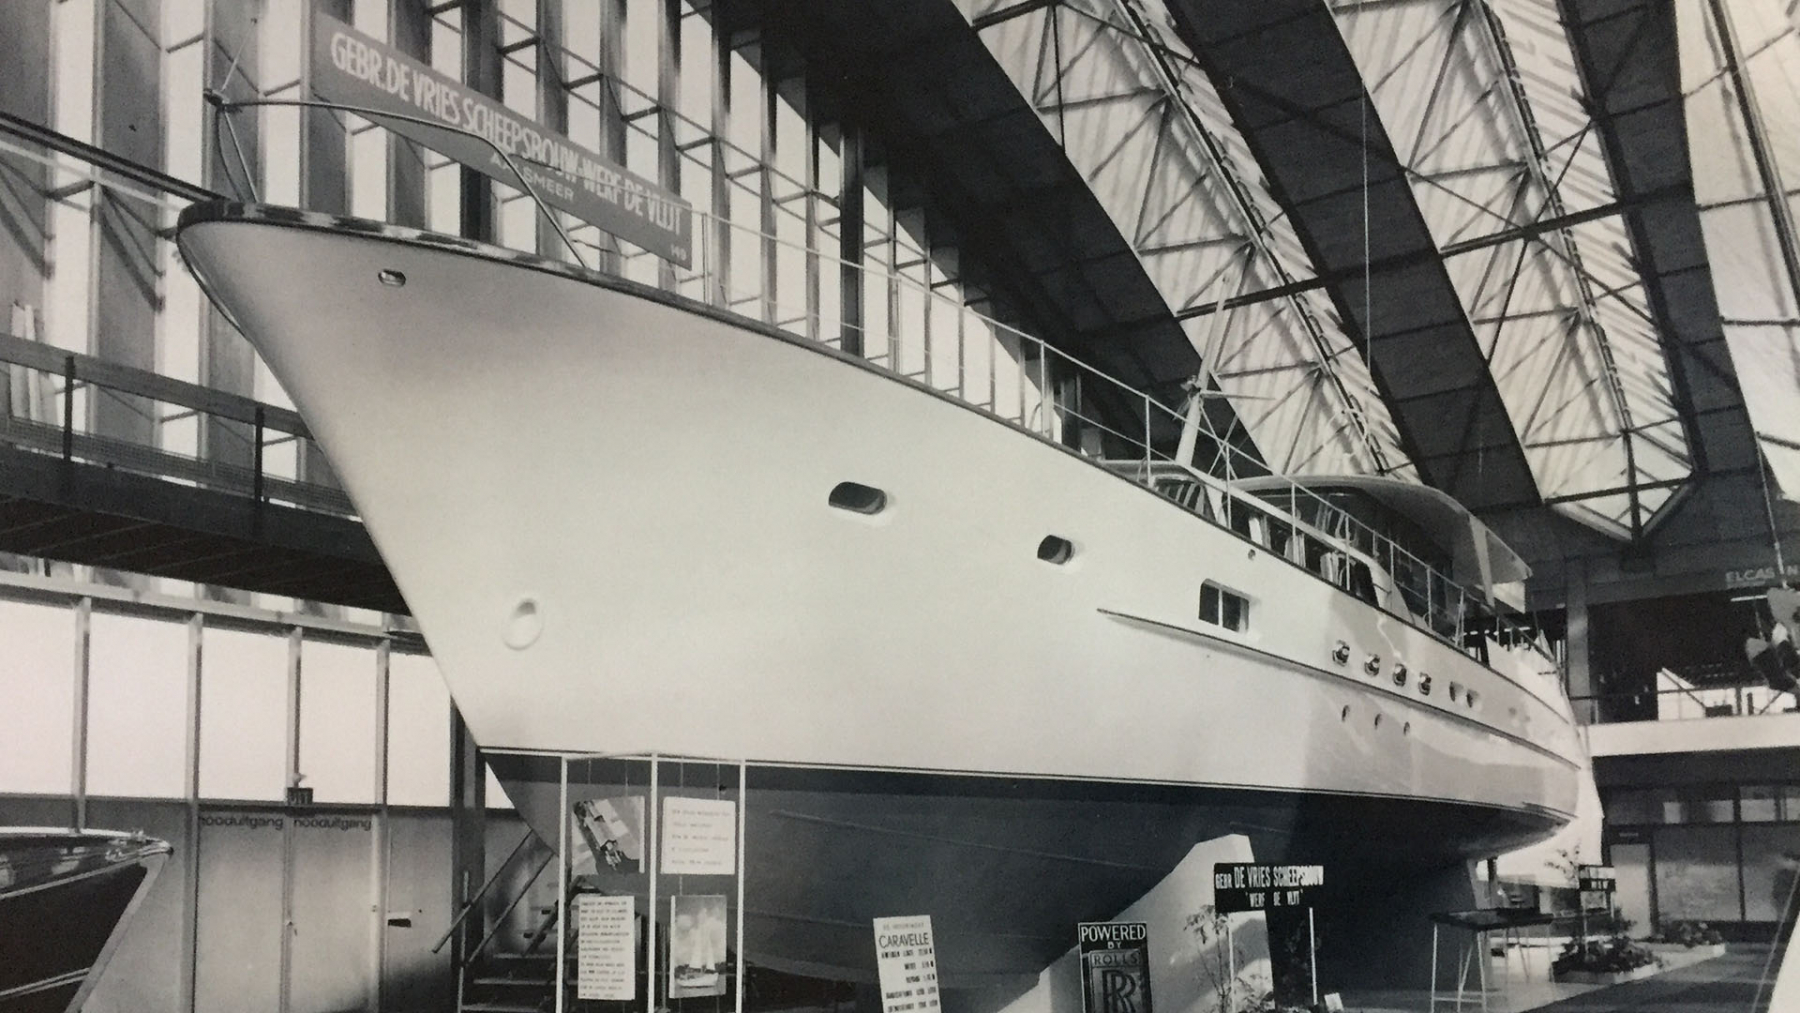 Amsterdam Boat Show 1964